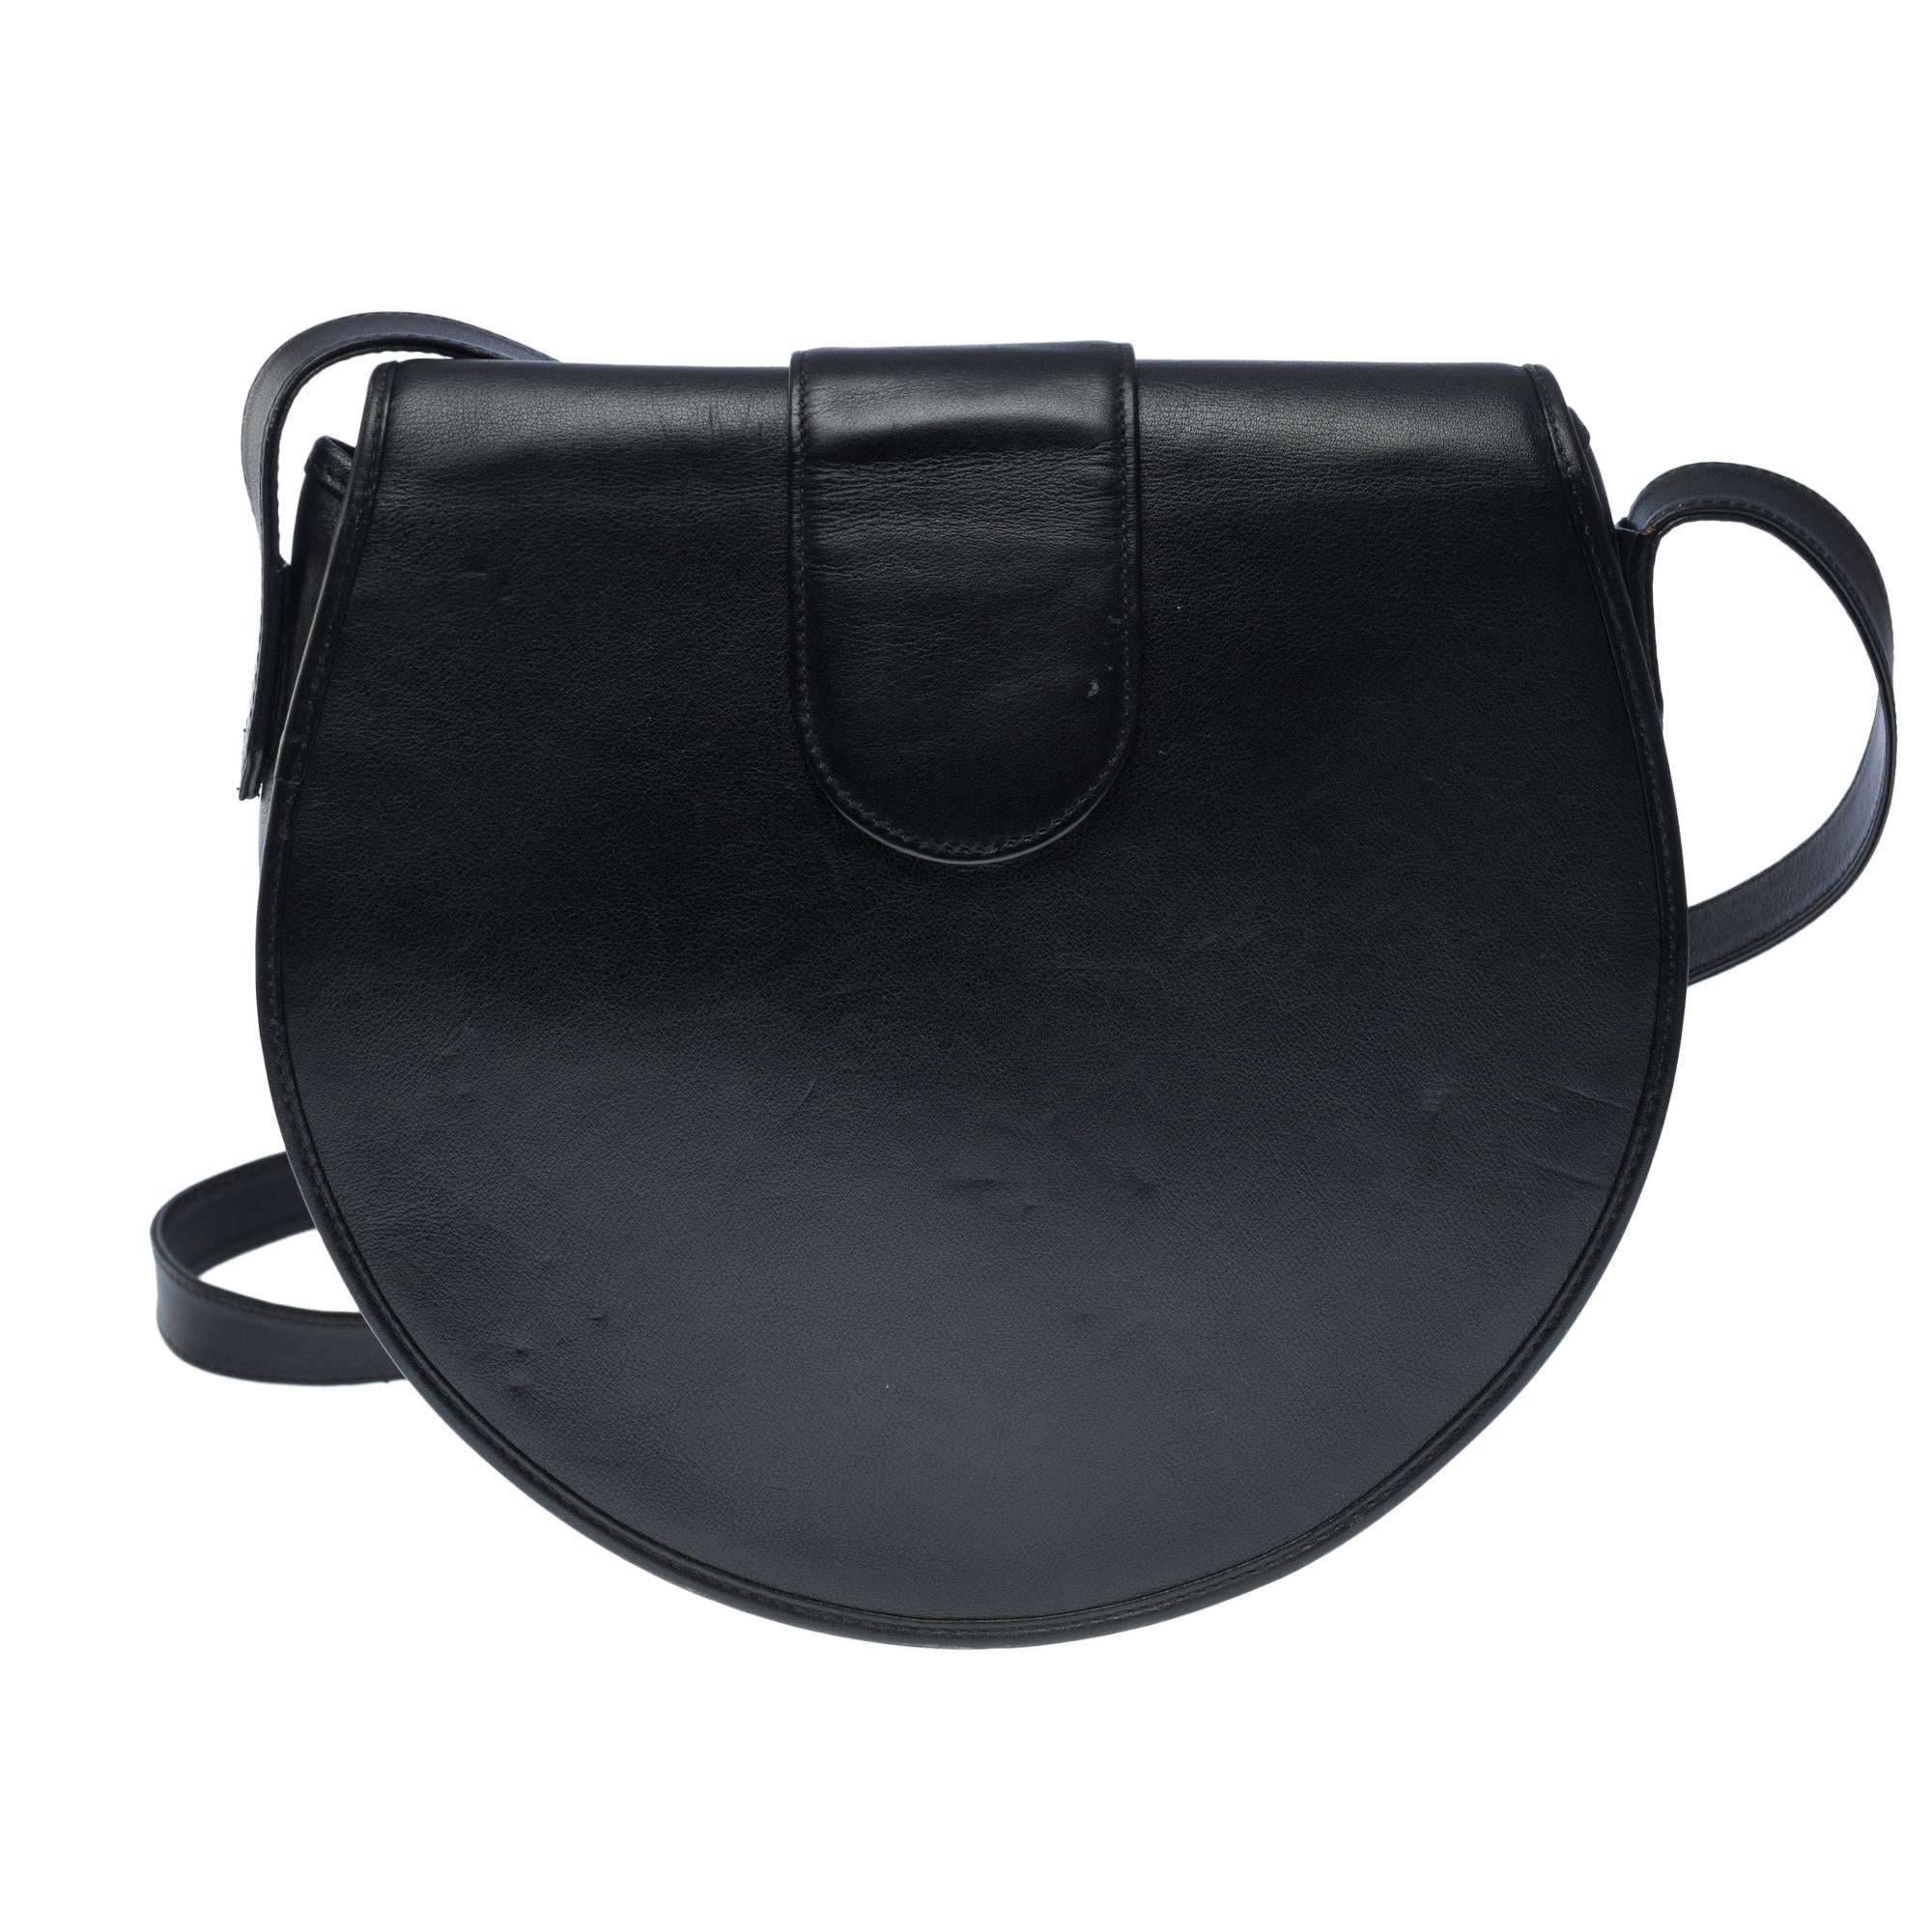 Women's or Men's Lovely YSL shoulder bag in the shape of a half moon in black leather, GHW